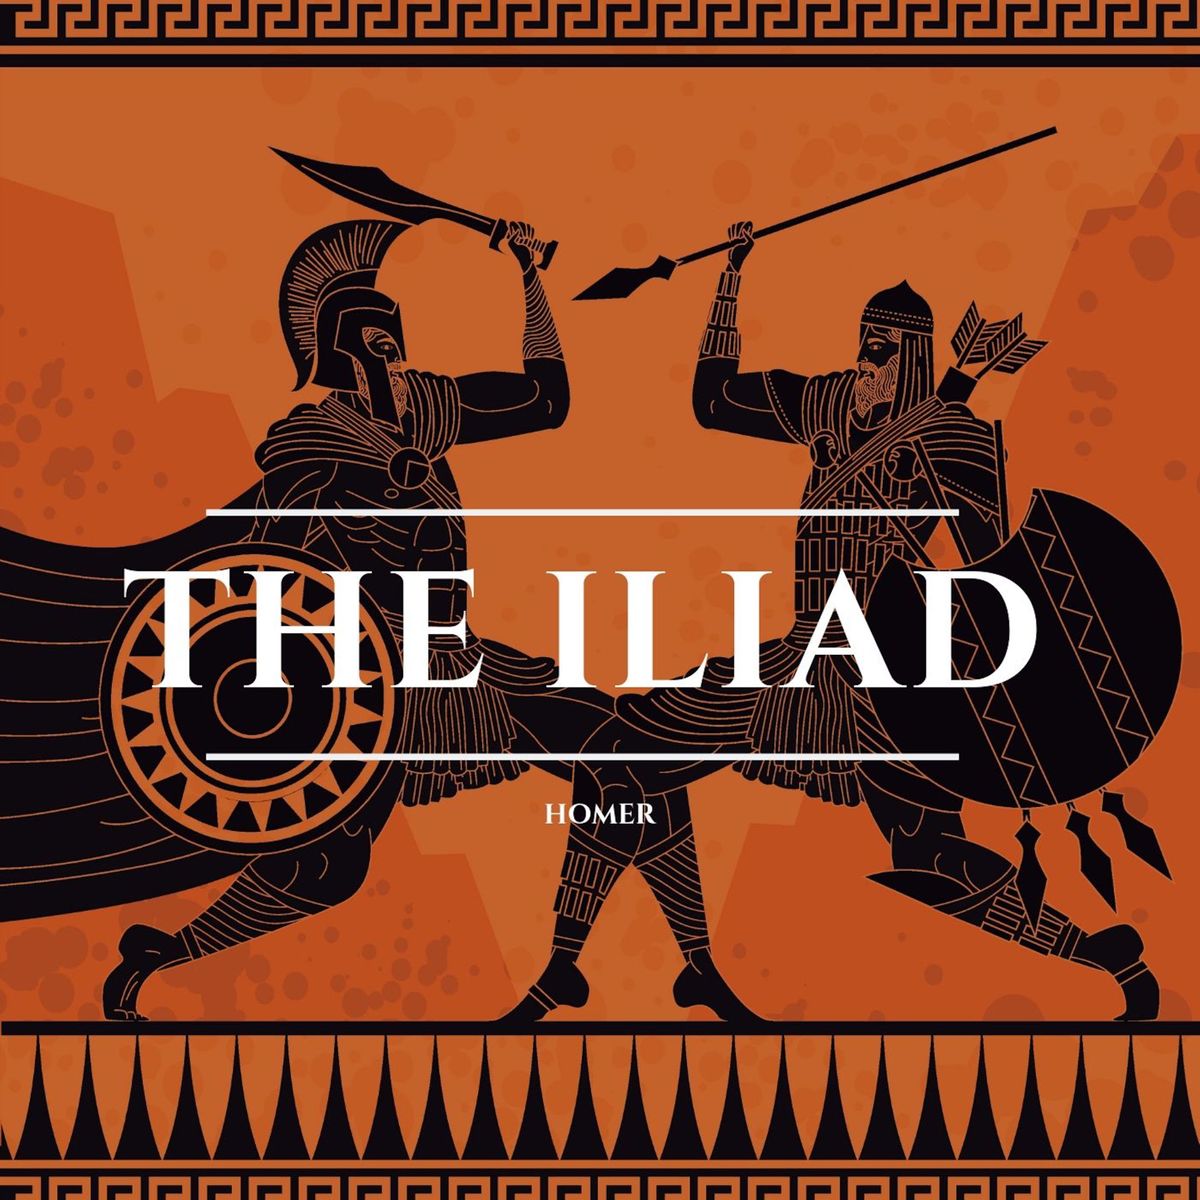 the iliad hero's journey prezi